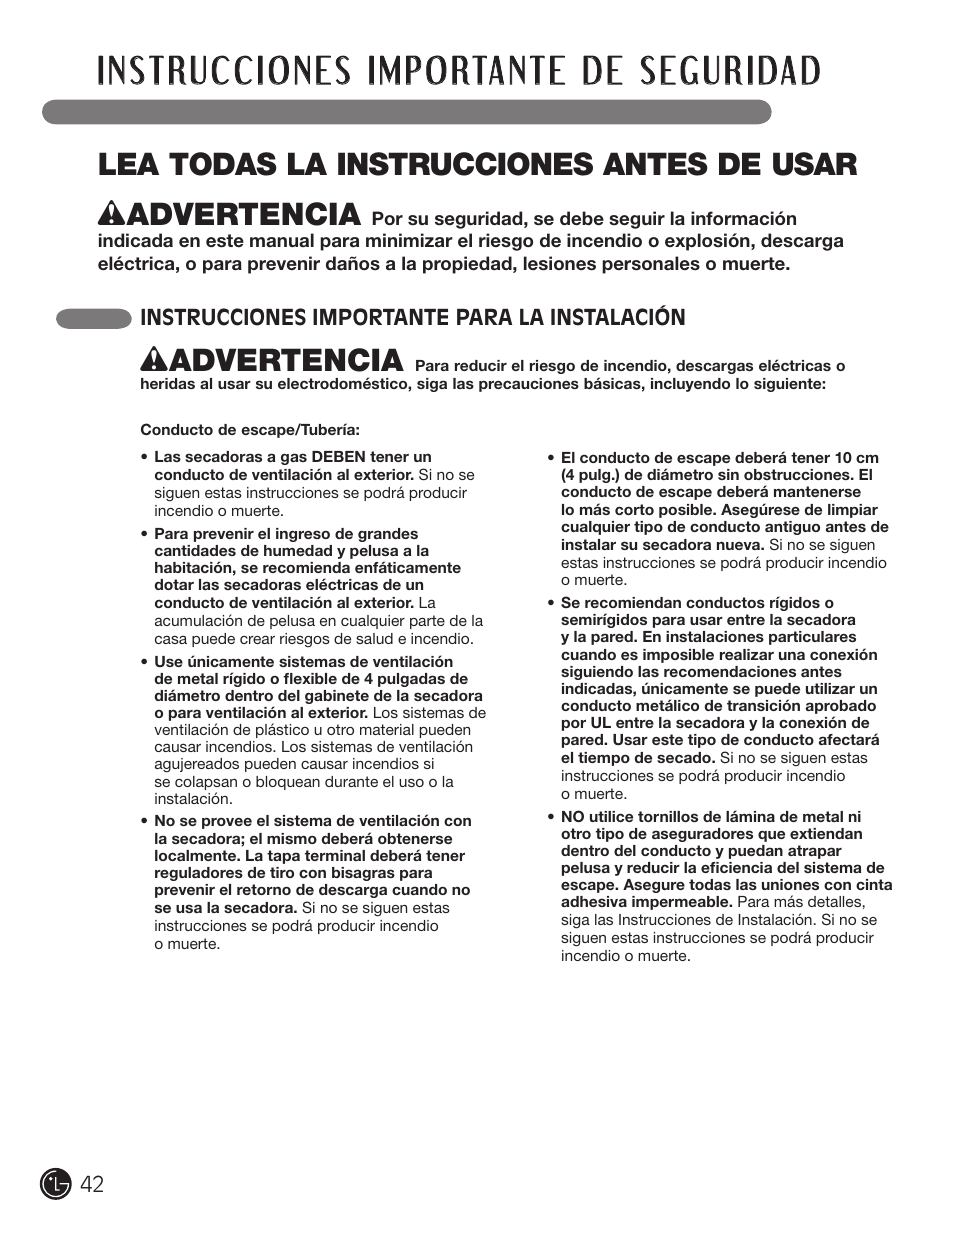 W advertencia | LG D5966W User Manual | Page 42 / 80